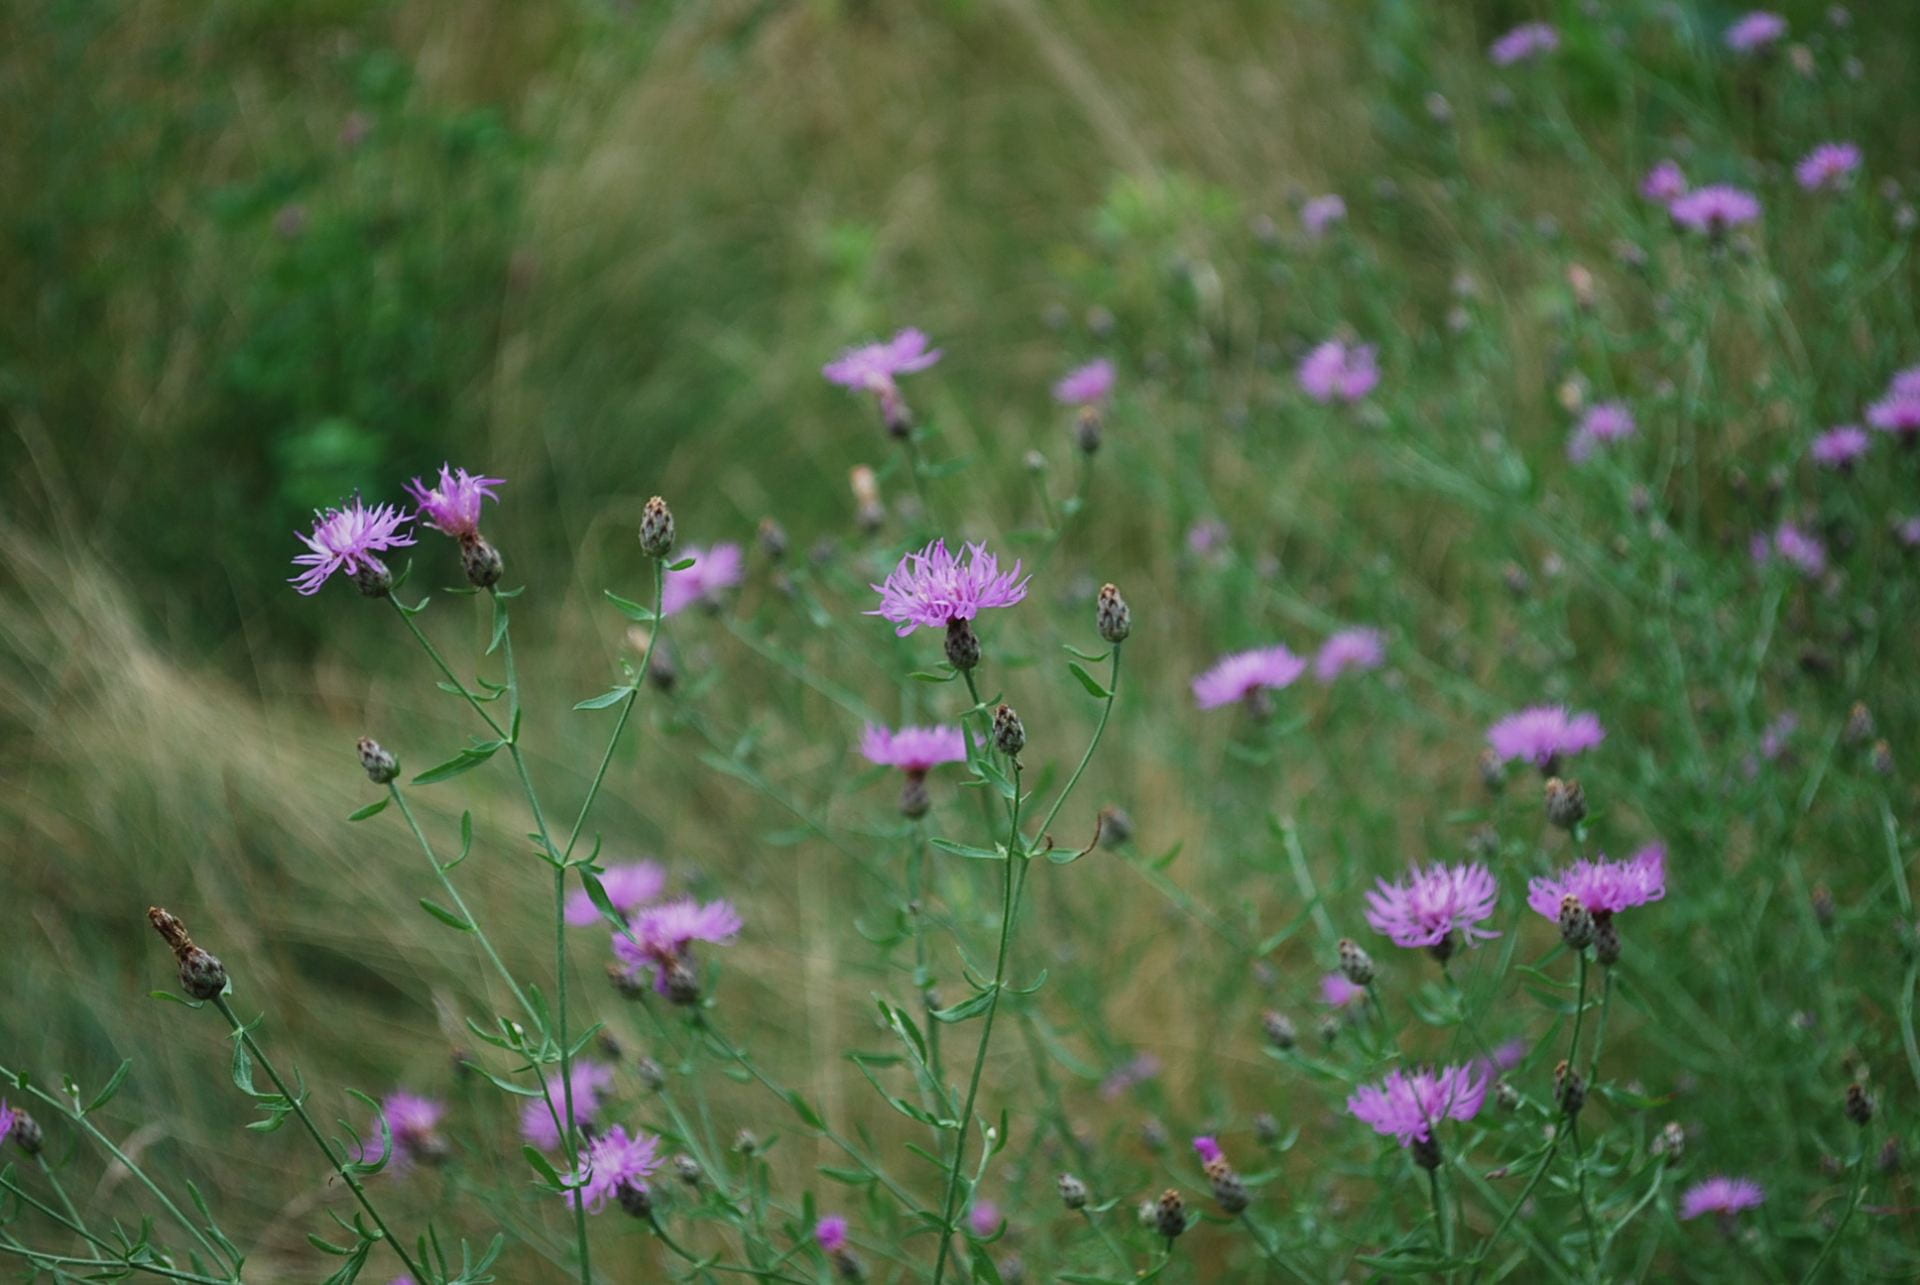 Wildlife flowers in grassy field.